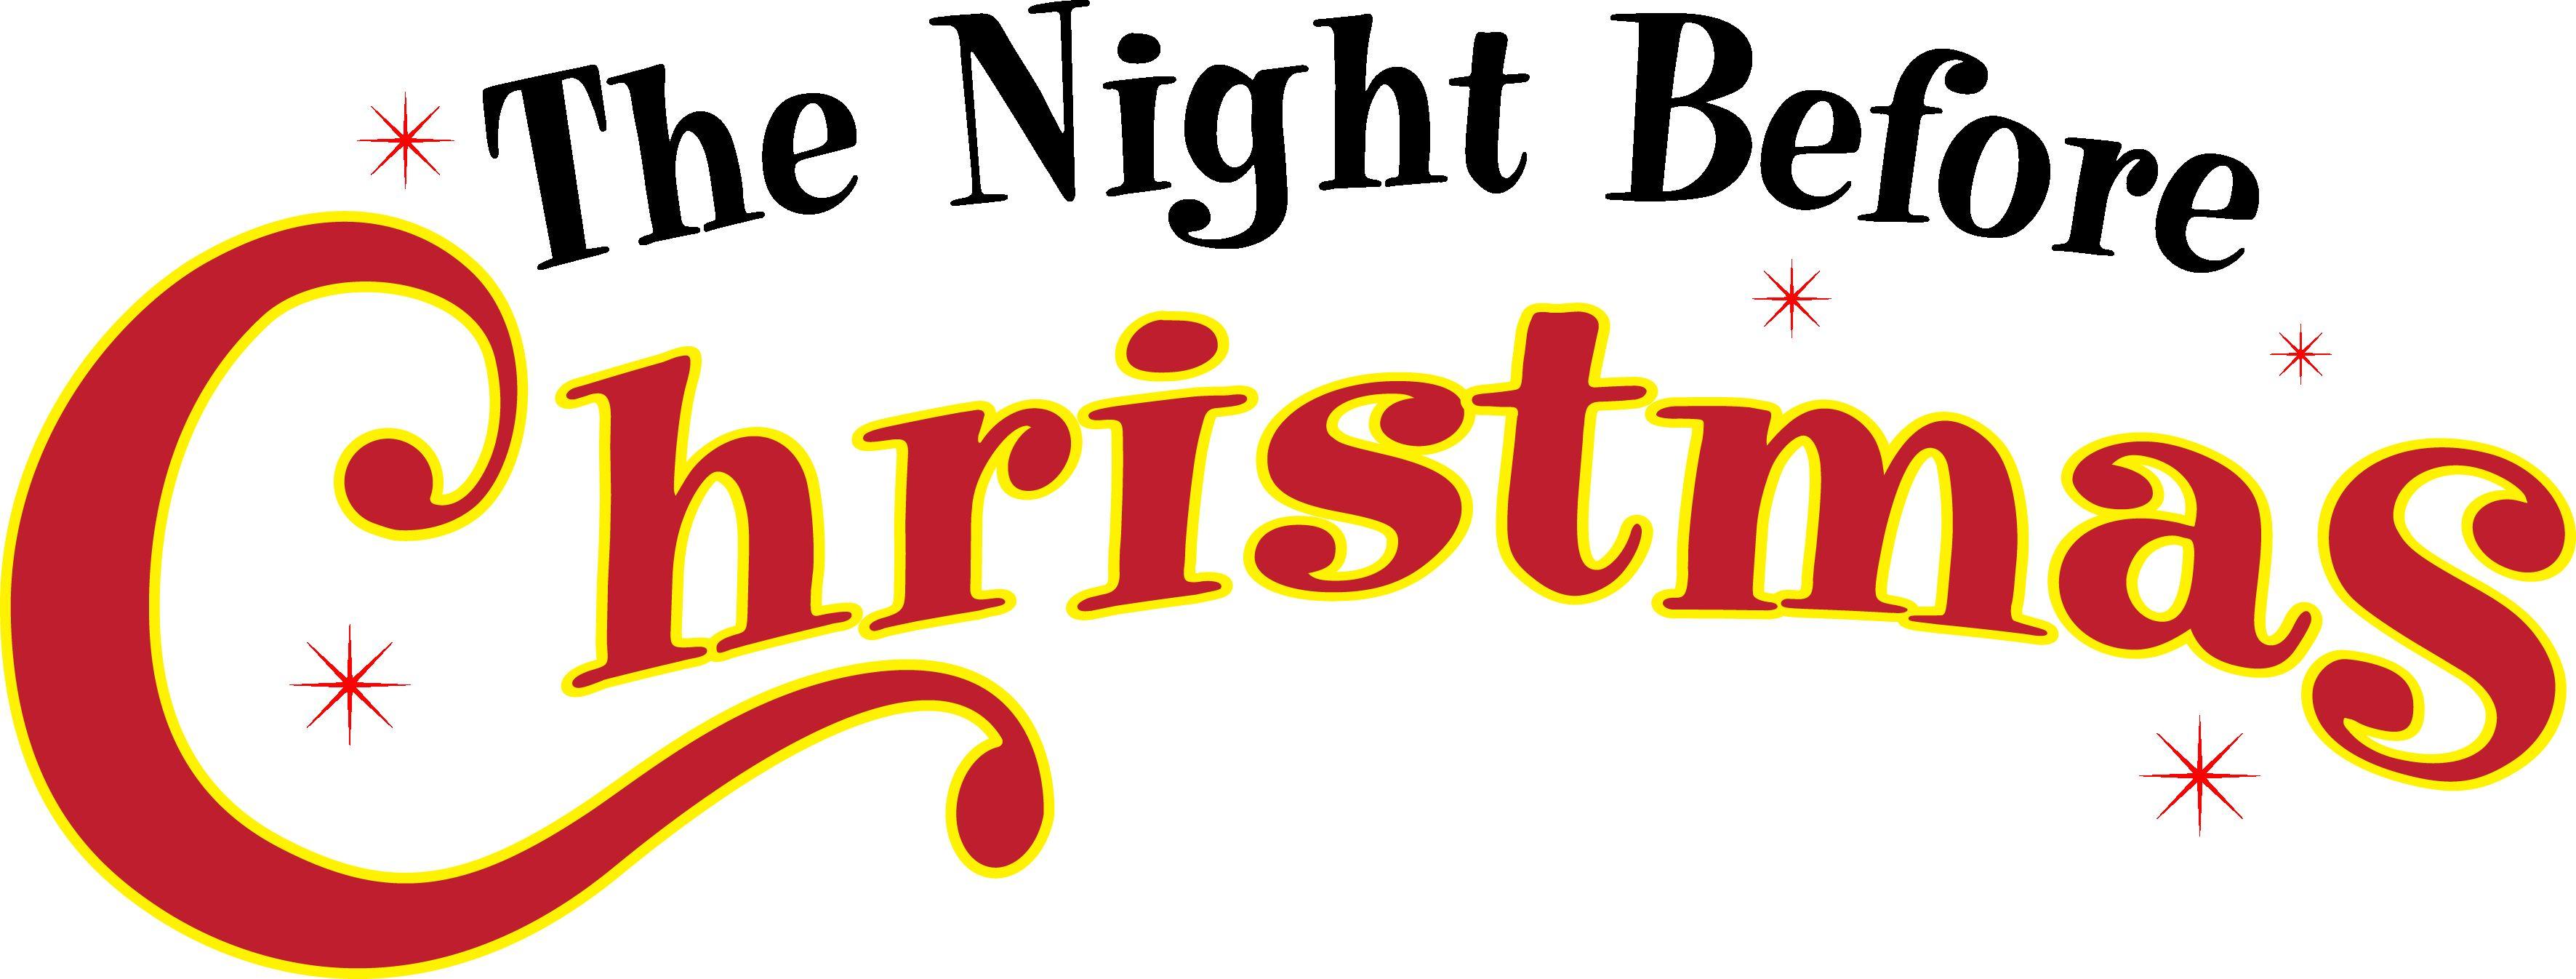 Google.com Christmas Logo - The Night Before Christmas at The Atkinson, SouthportThe Atkinson